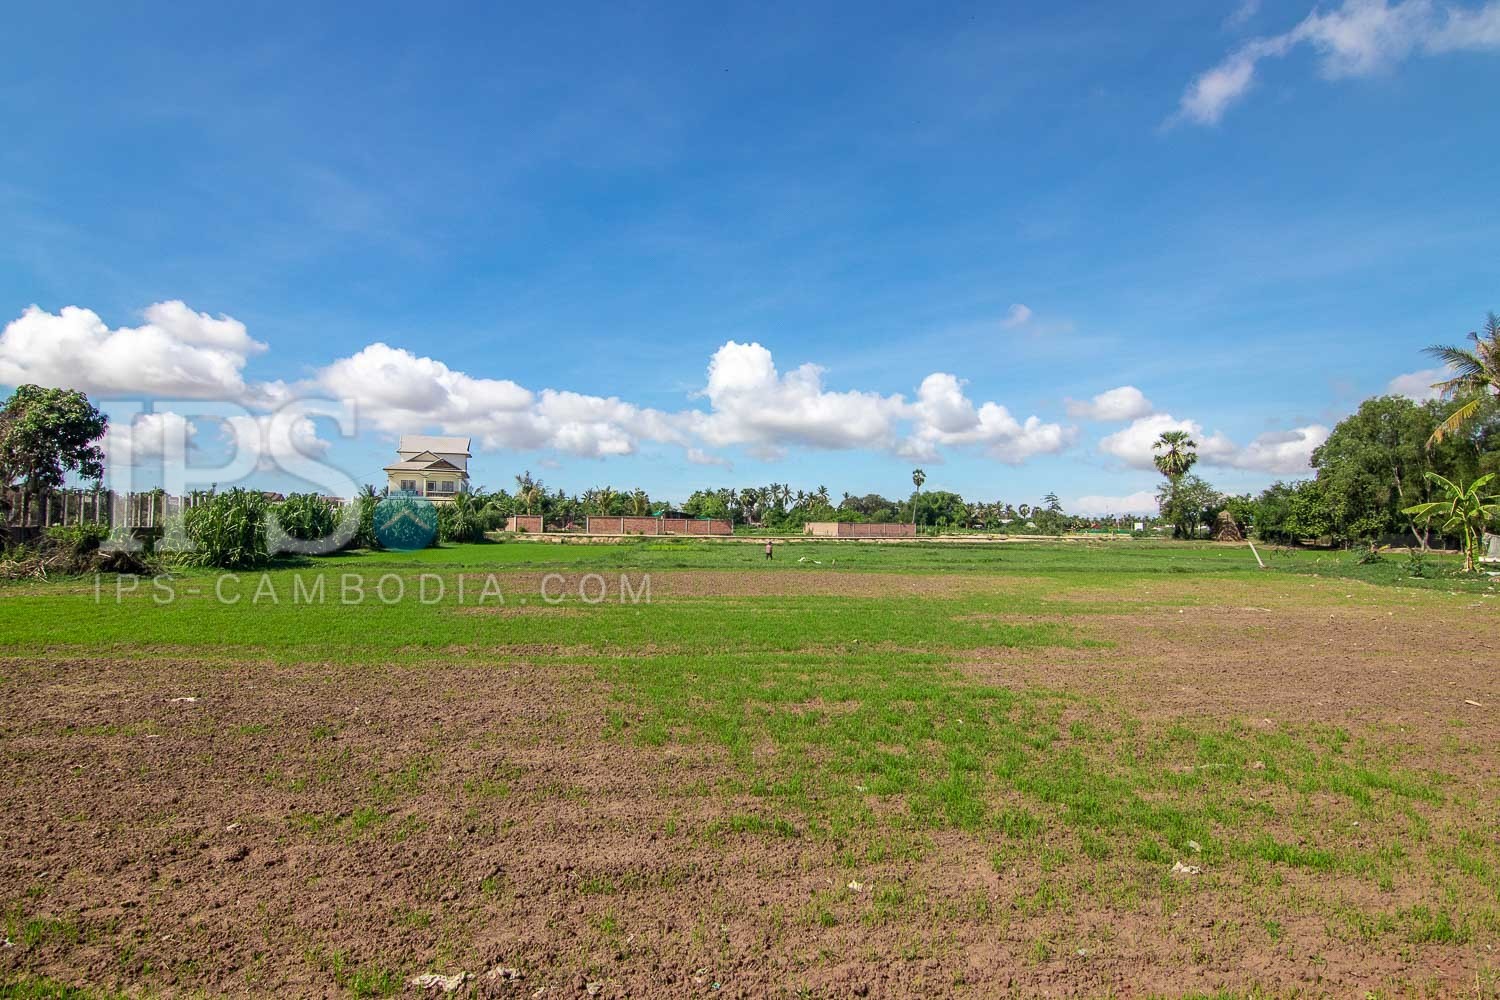 630 Sqm Land For Sale - Chreav, Siem Reap 10762 | IPS Cambodia